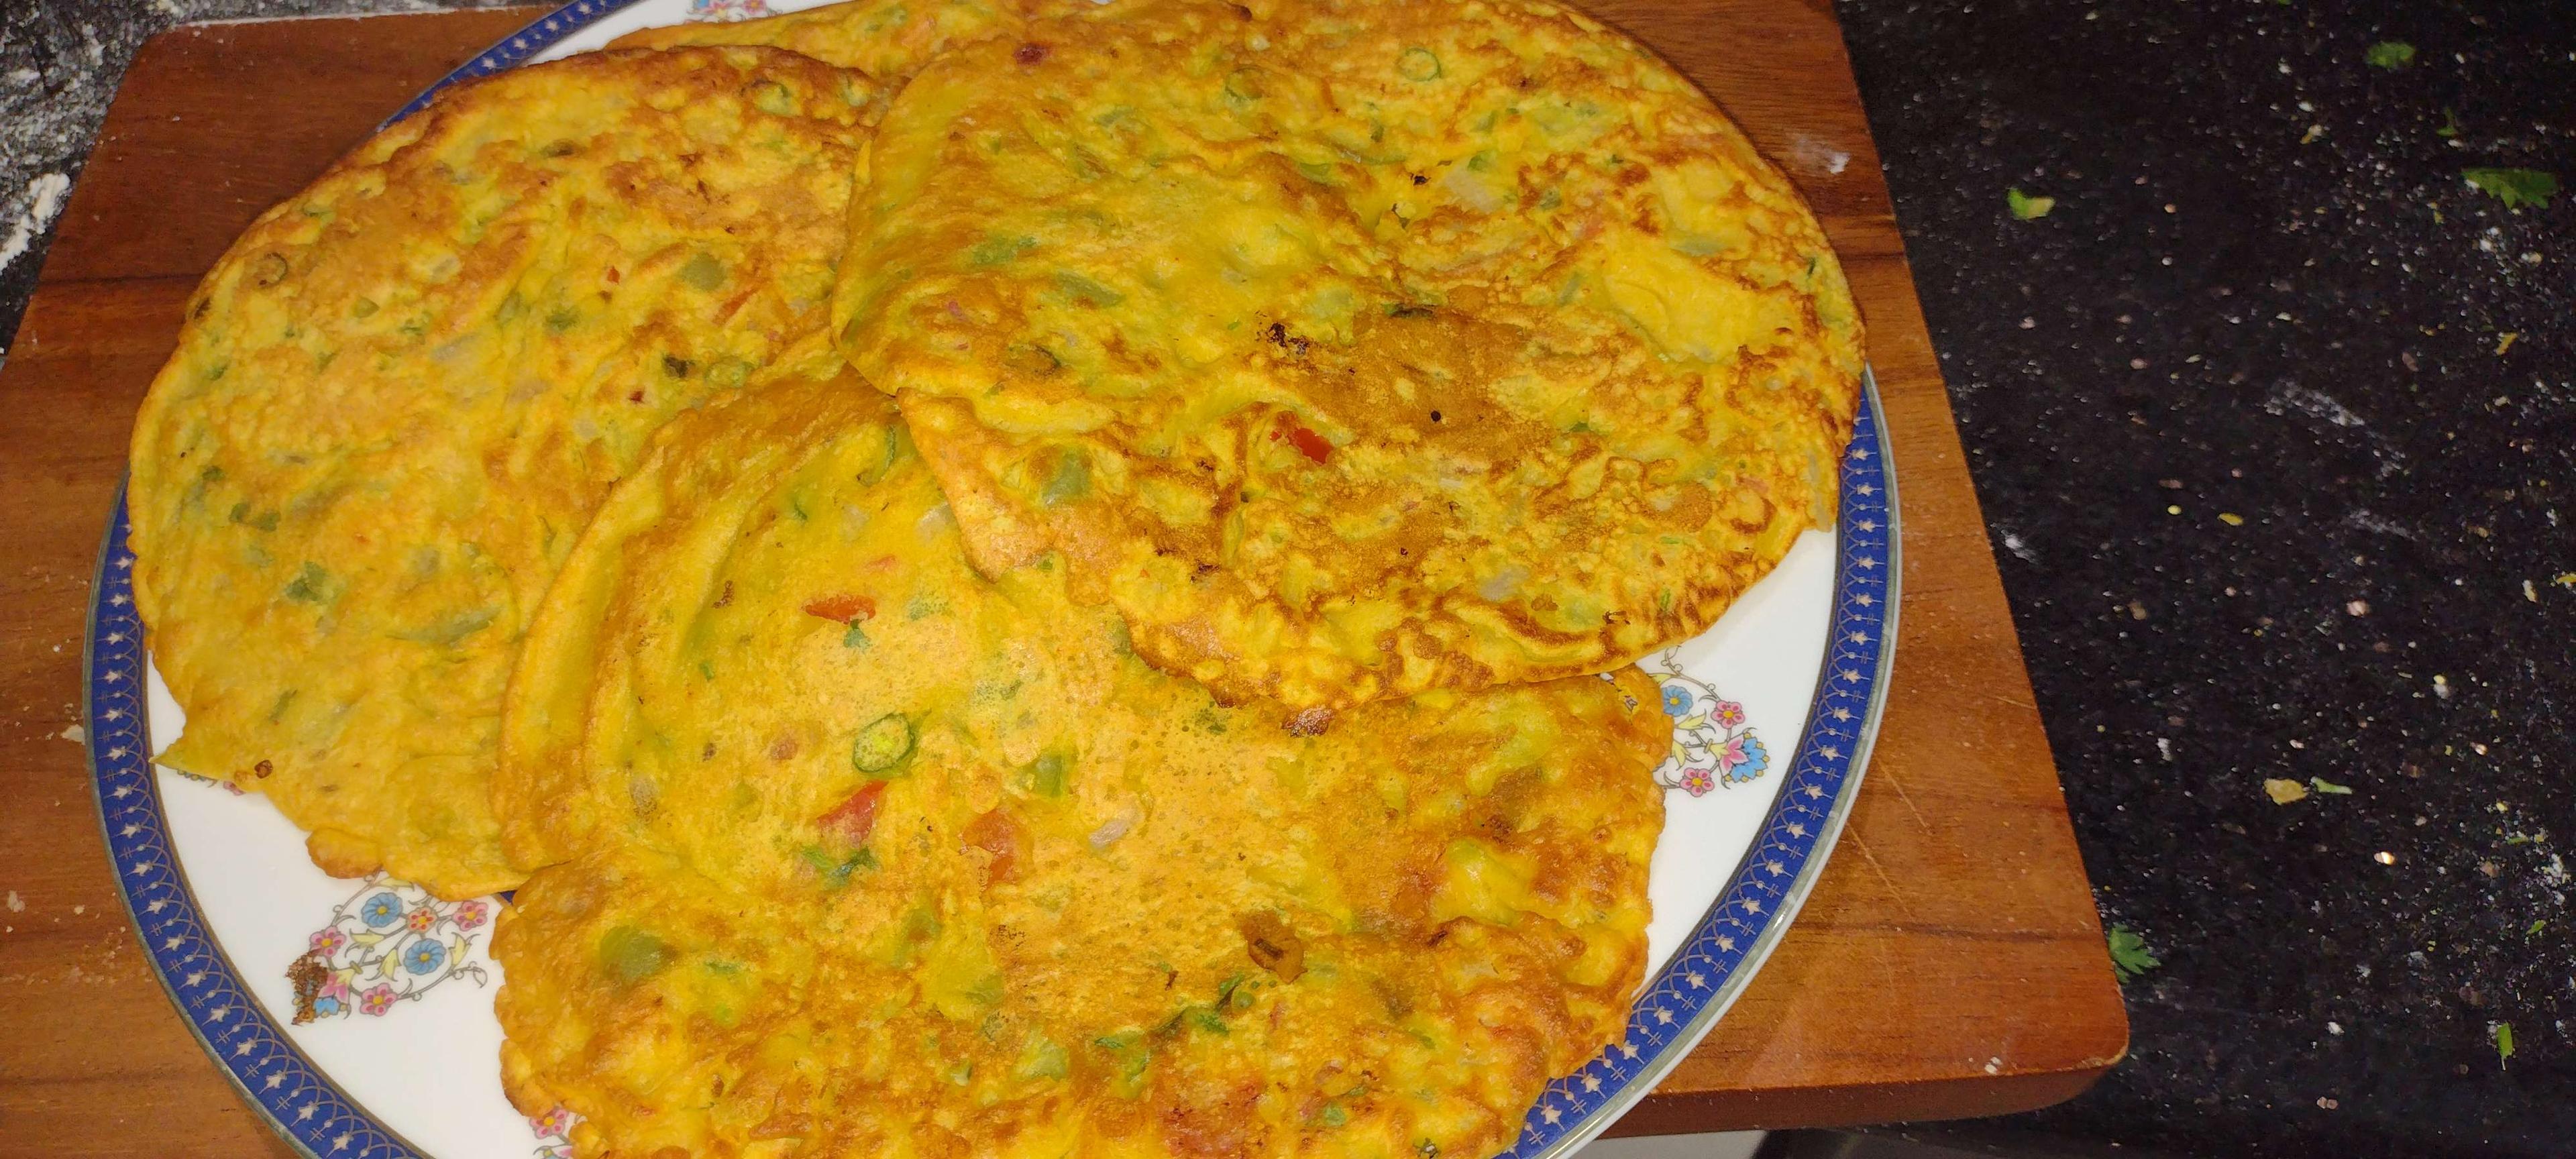 Delicious Cheela prepared by COOX